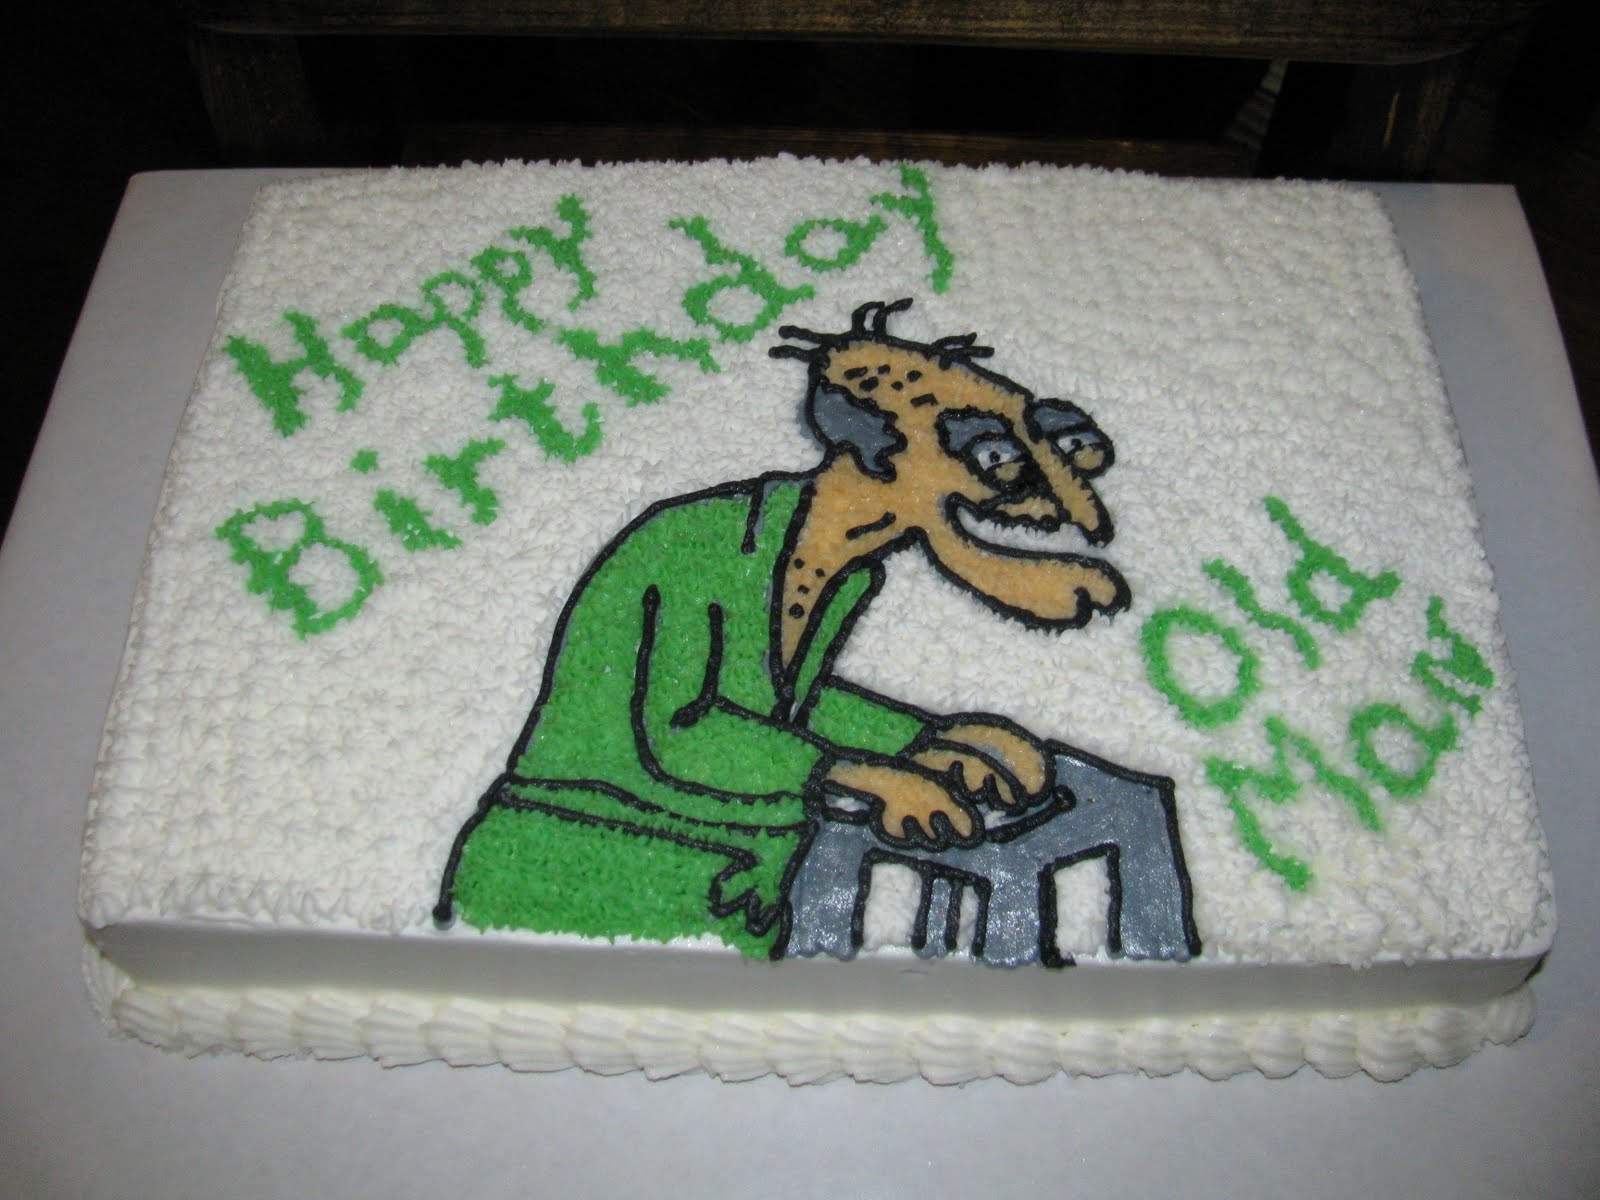 Second Generation Cake Design: Old Man Birthday Cake